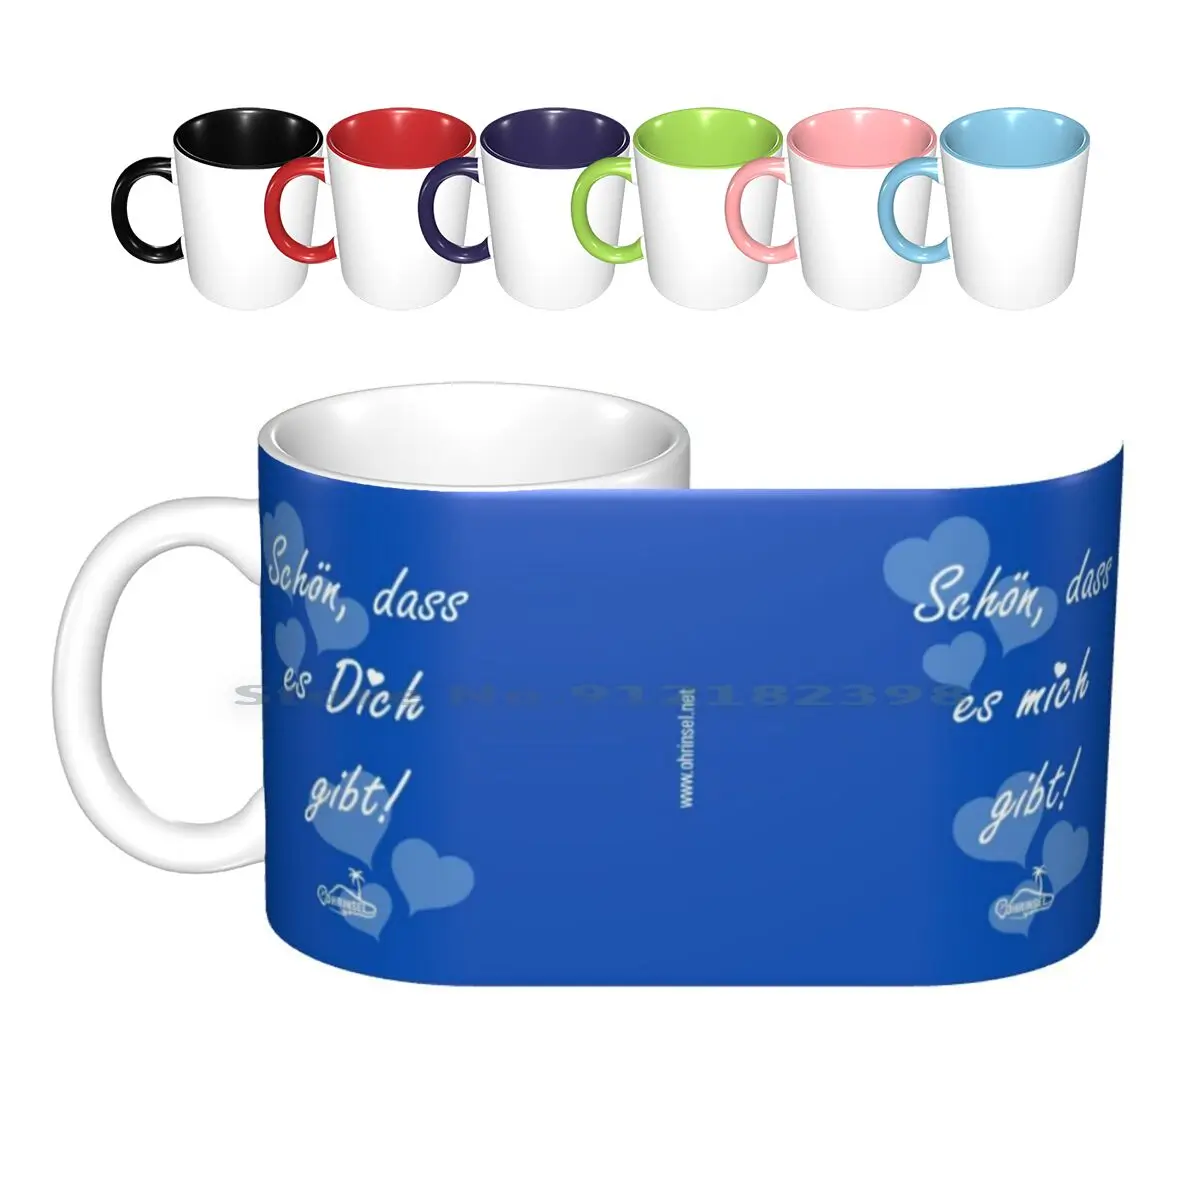 

Nice That There Is Me / You Cup - Blue Ceramic Mugs Coffee Cups Milk Tea Mug Cup Cups Coffee Pot Love Love Earrings Island